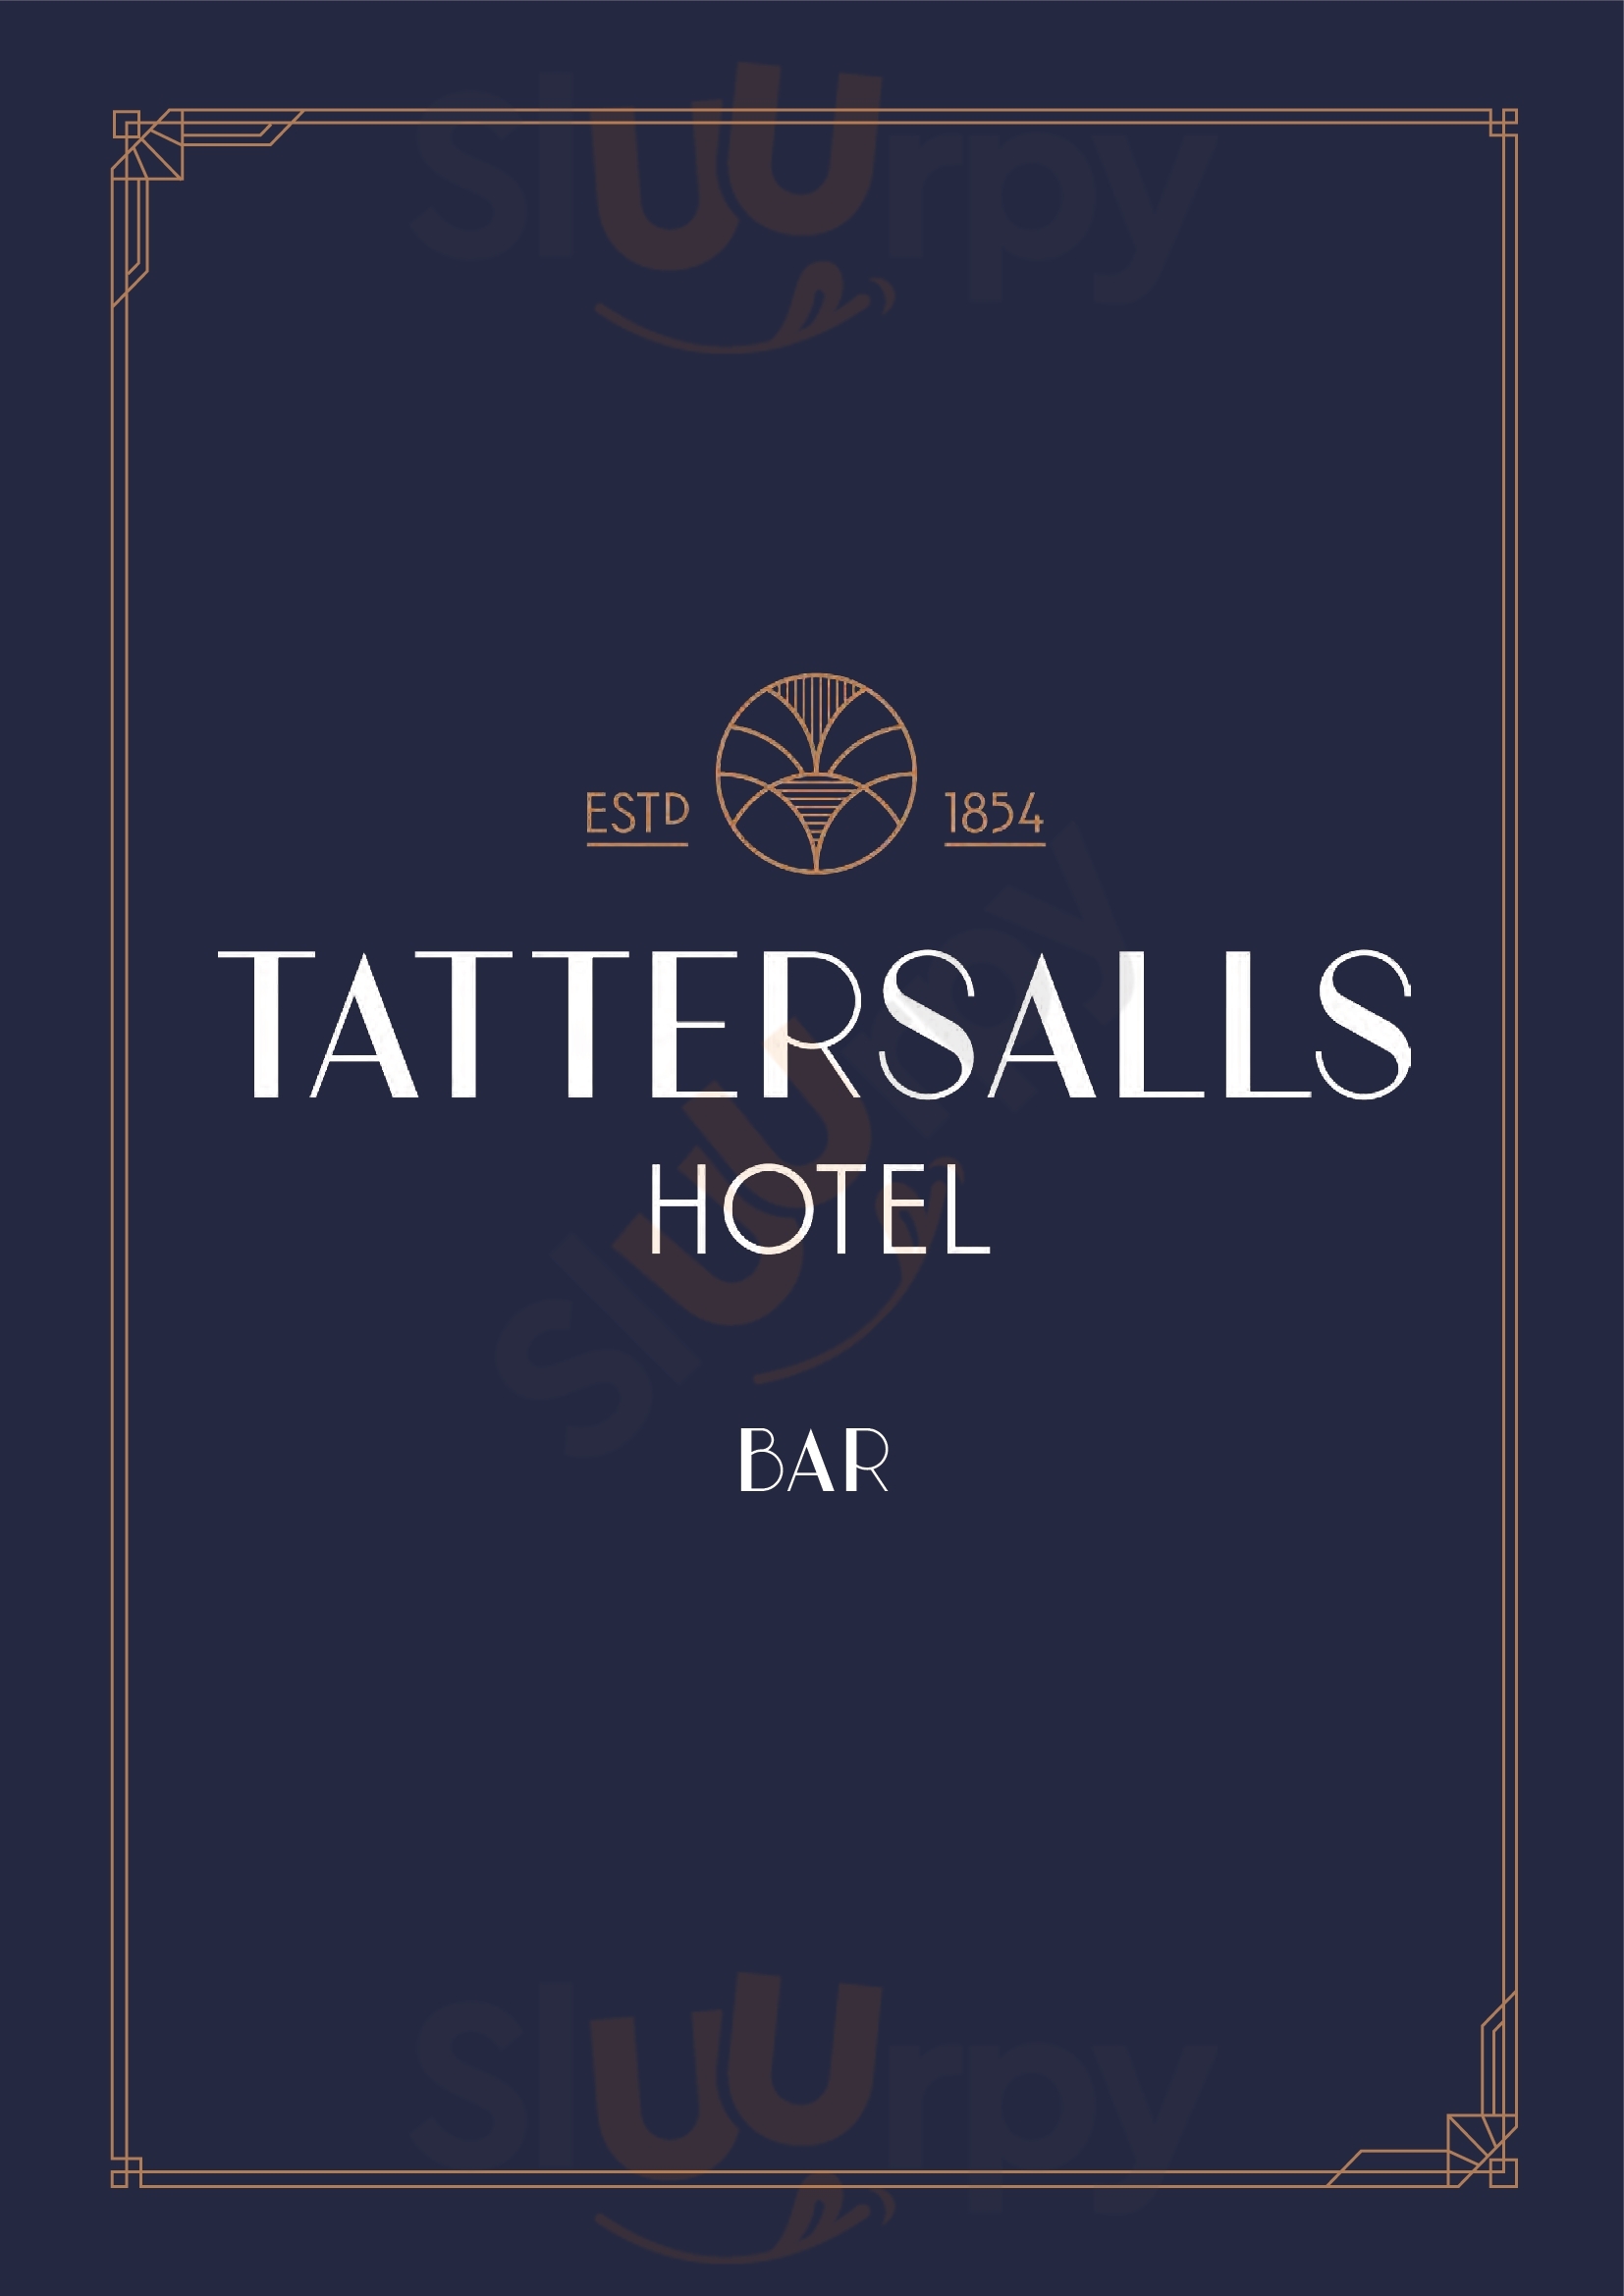 Tattersalls Hotel Armidale - Restaurant Armidale Menu - 1